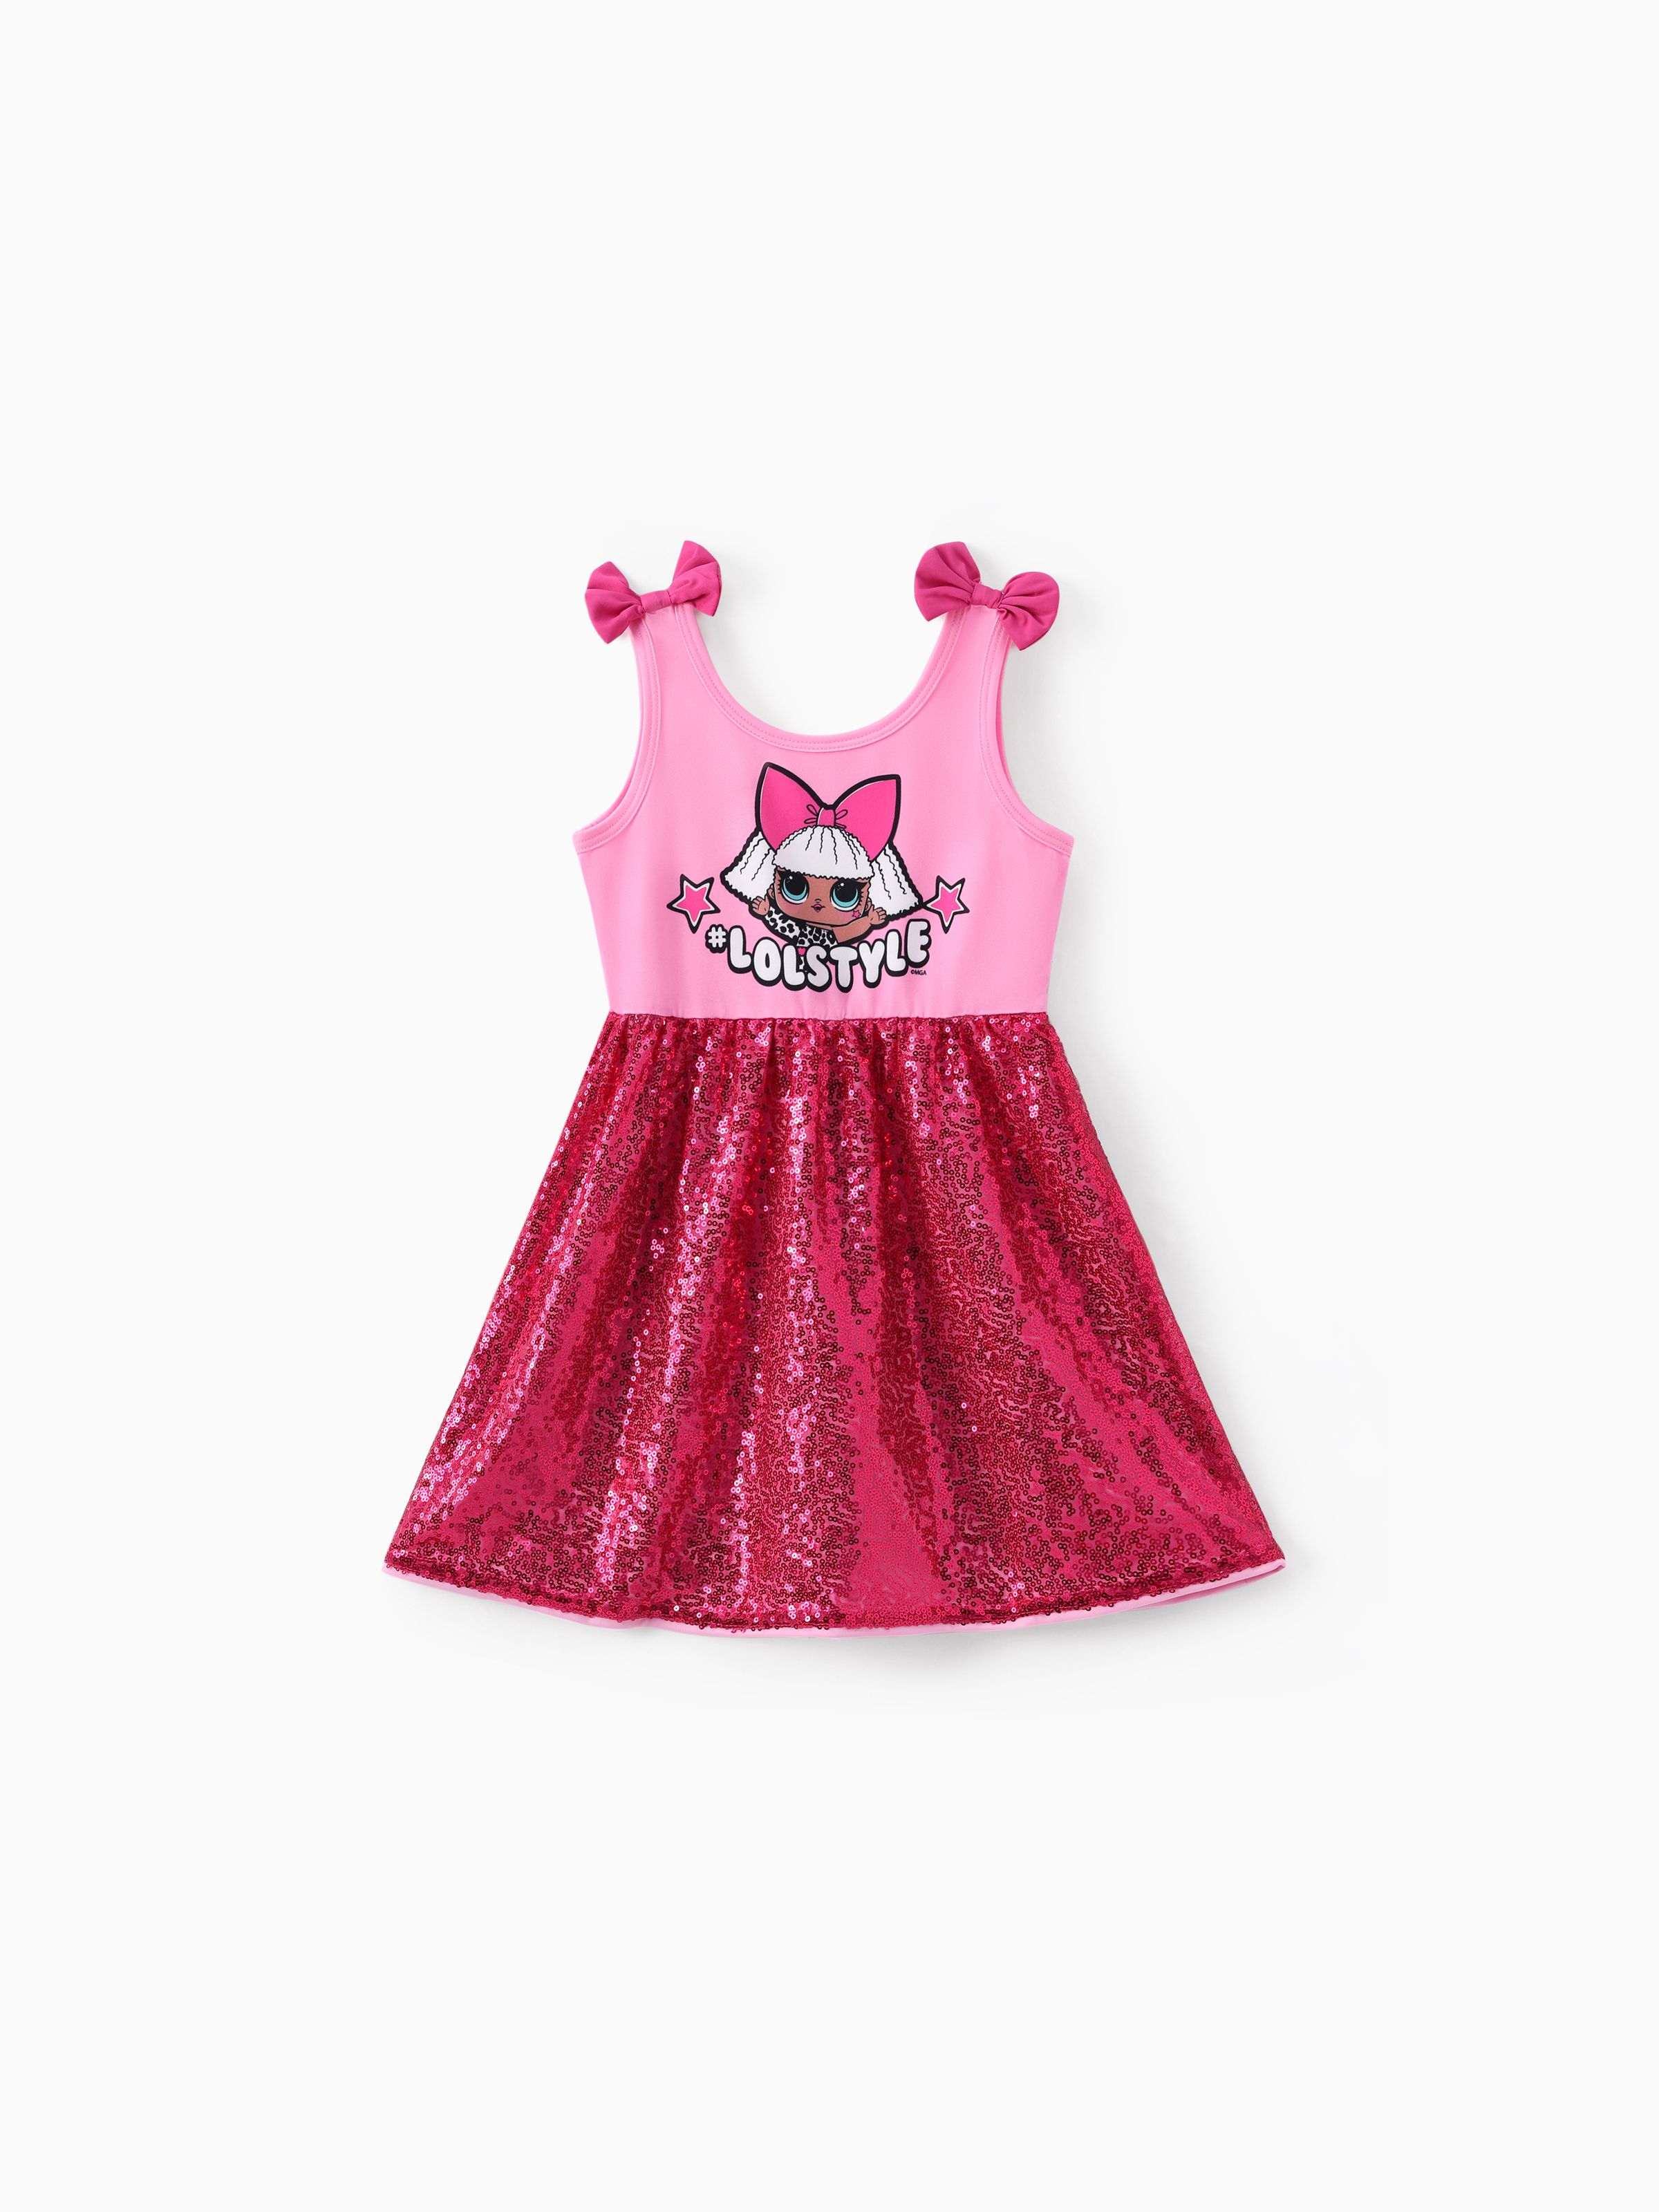 

LOL SURPRISE! Toddler Girls 1pc Character Print Bowknot Sequin Sleeveless Dress